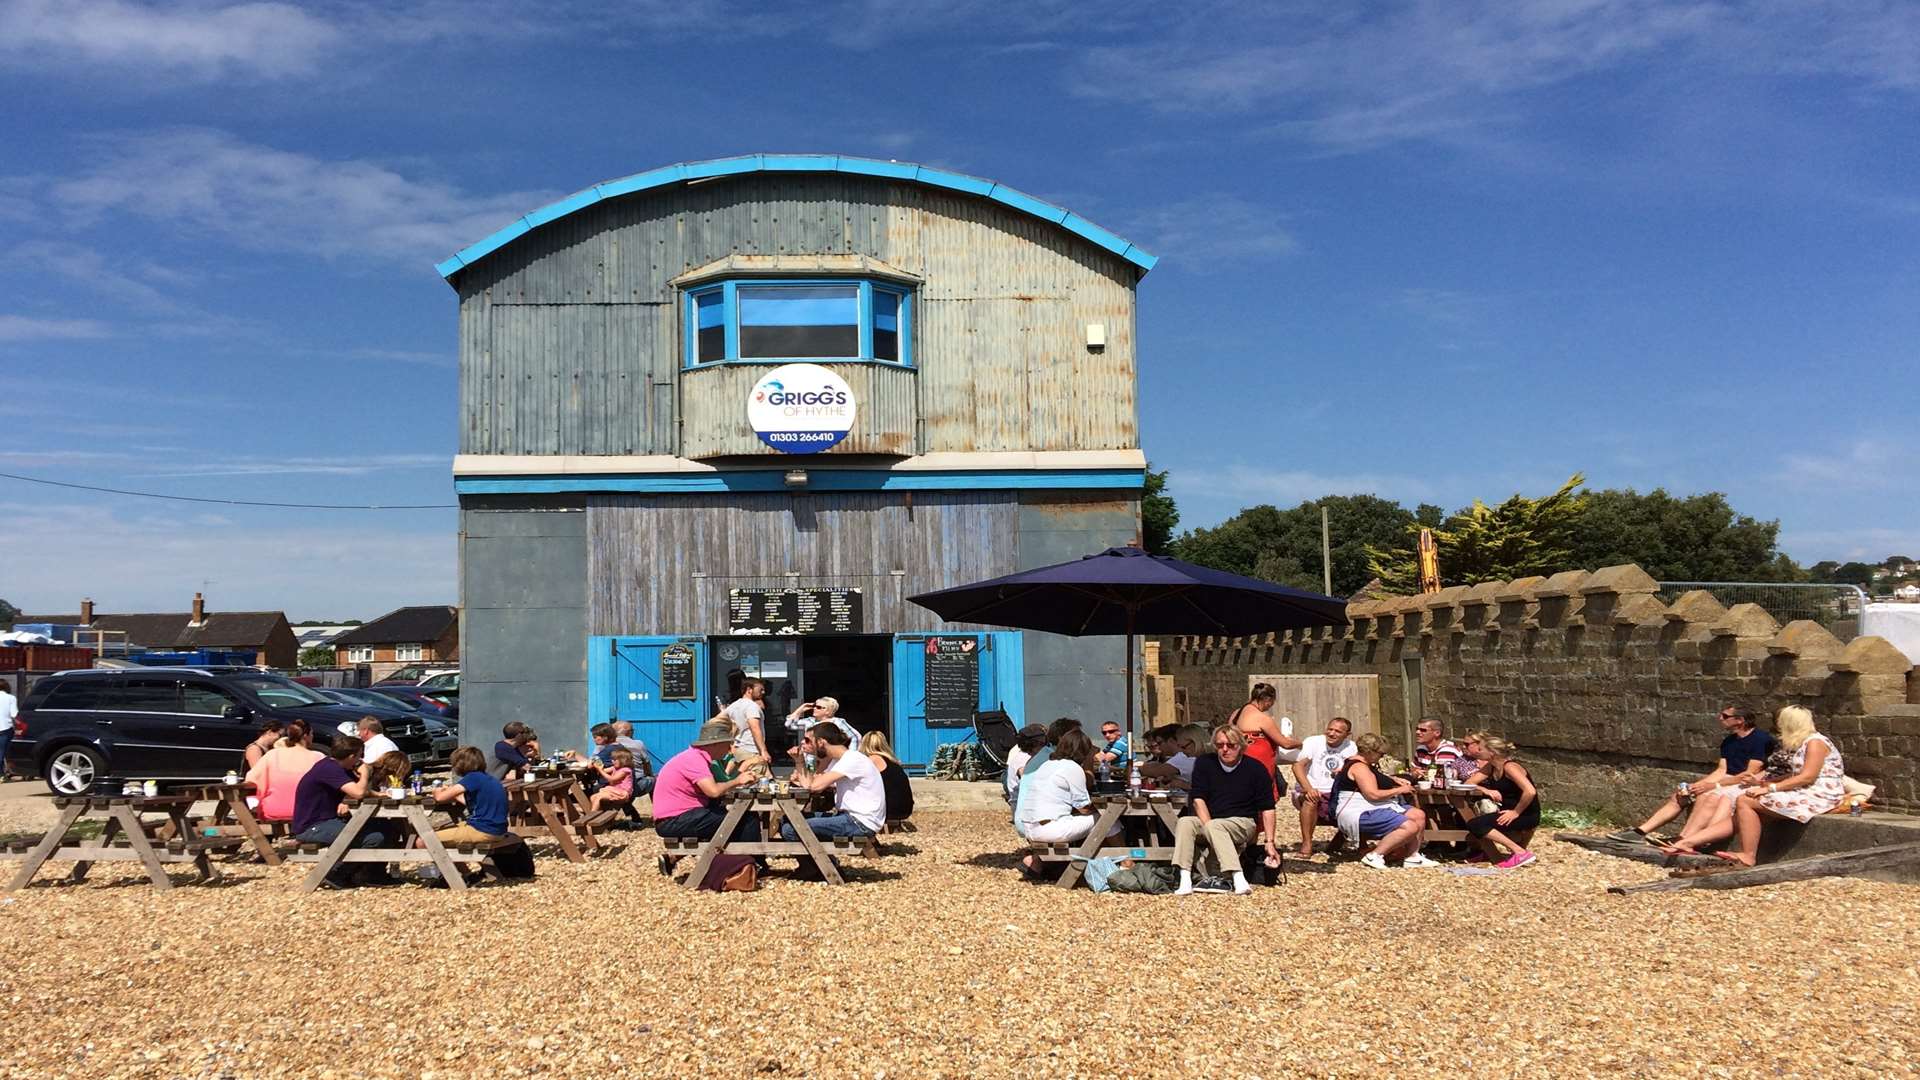 The best seaside restaurants in Kent